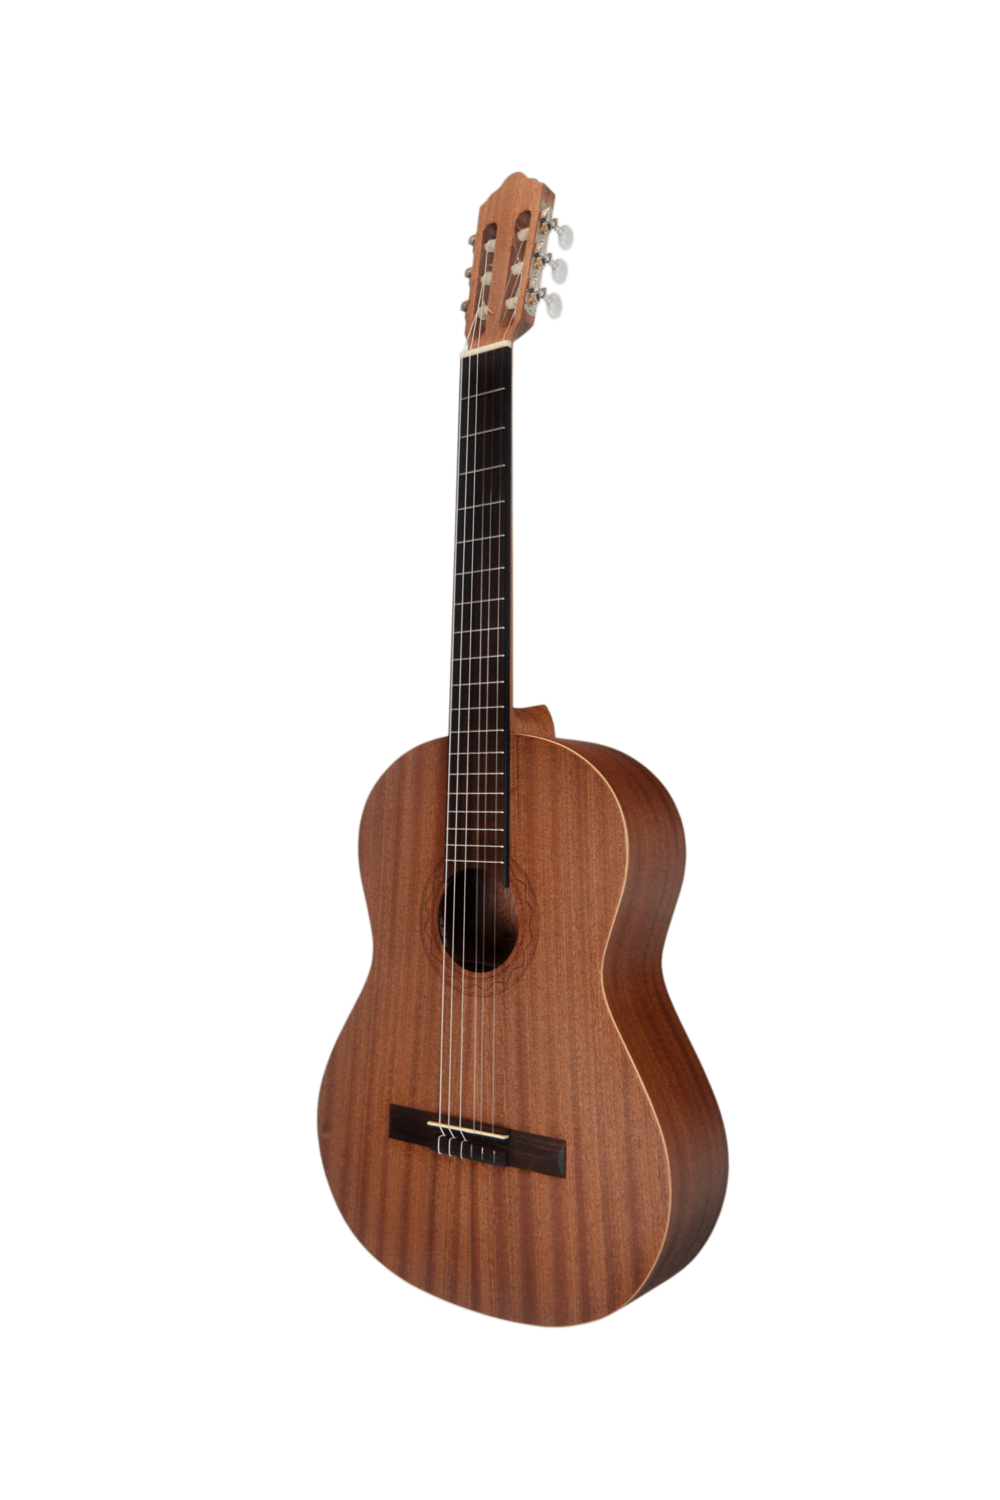 Lusitana GCMOP4 classical guitar 3/4 size. Order code: LUS2008740